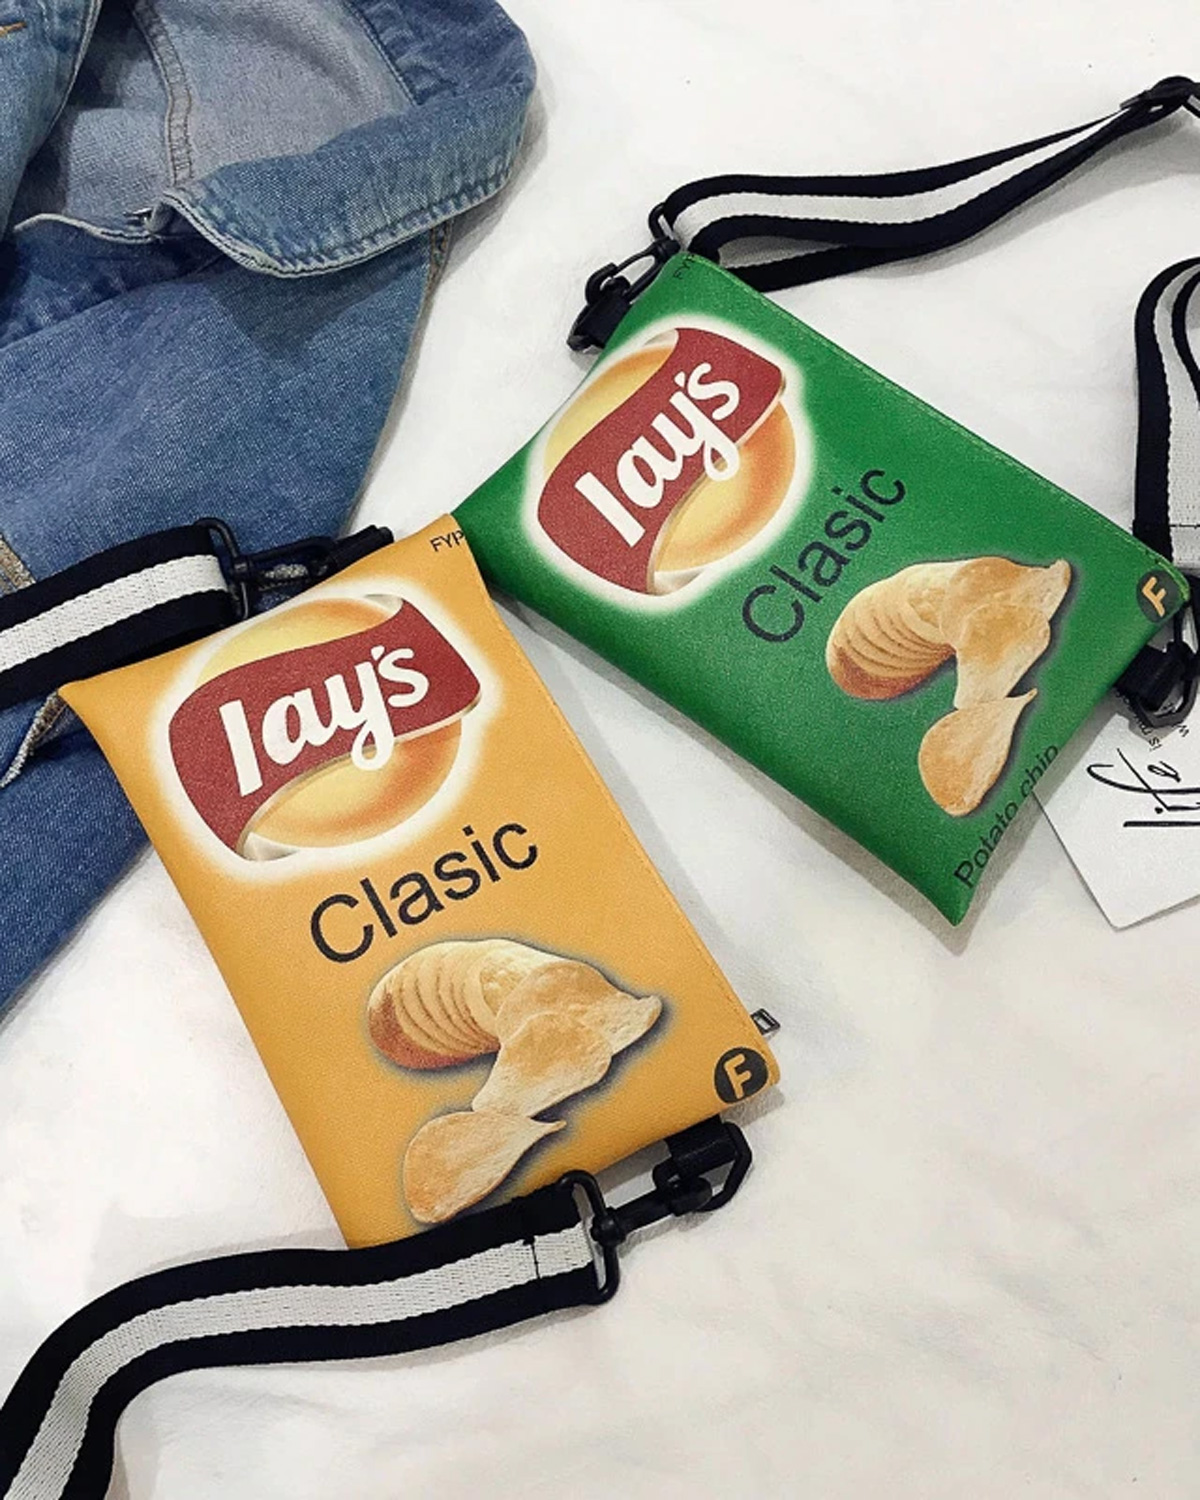 Balenciaga has created a bag that resembles a pack of Lay's potato